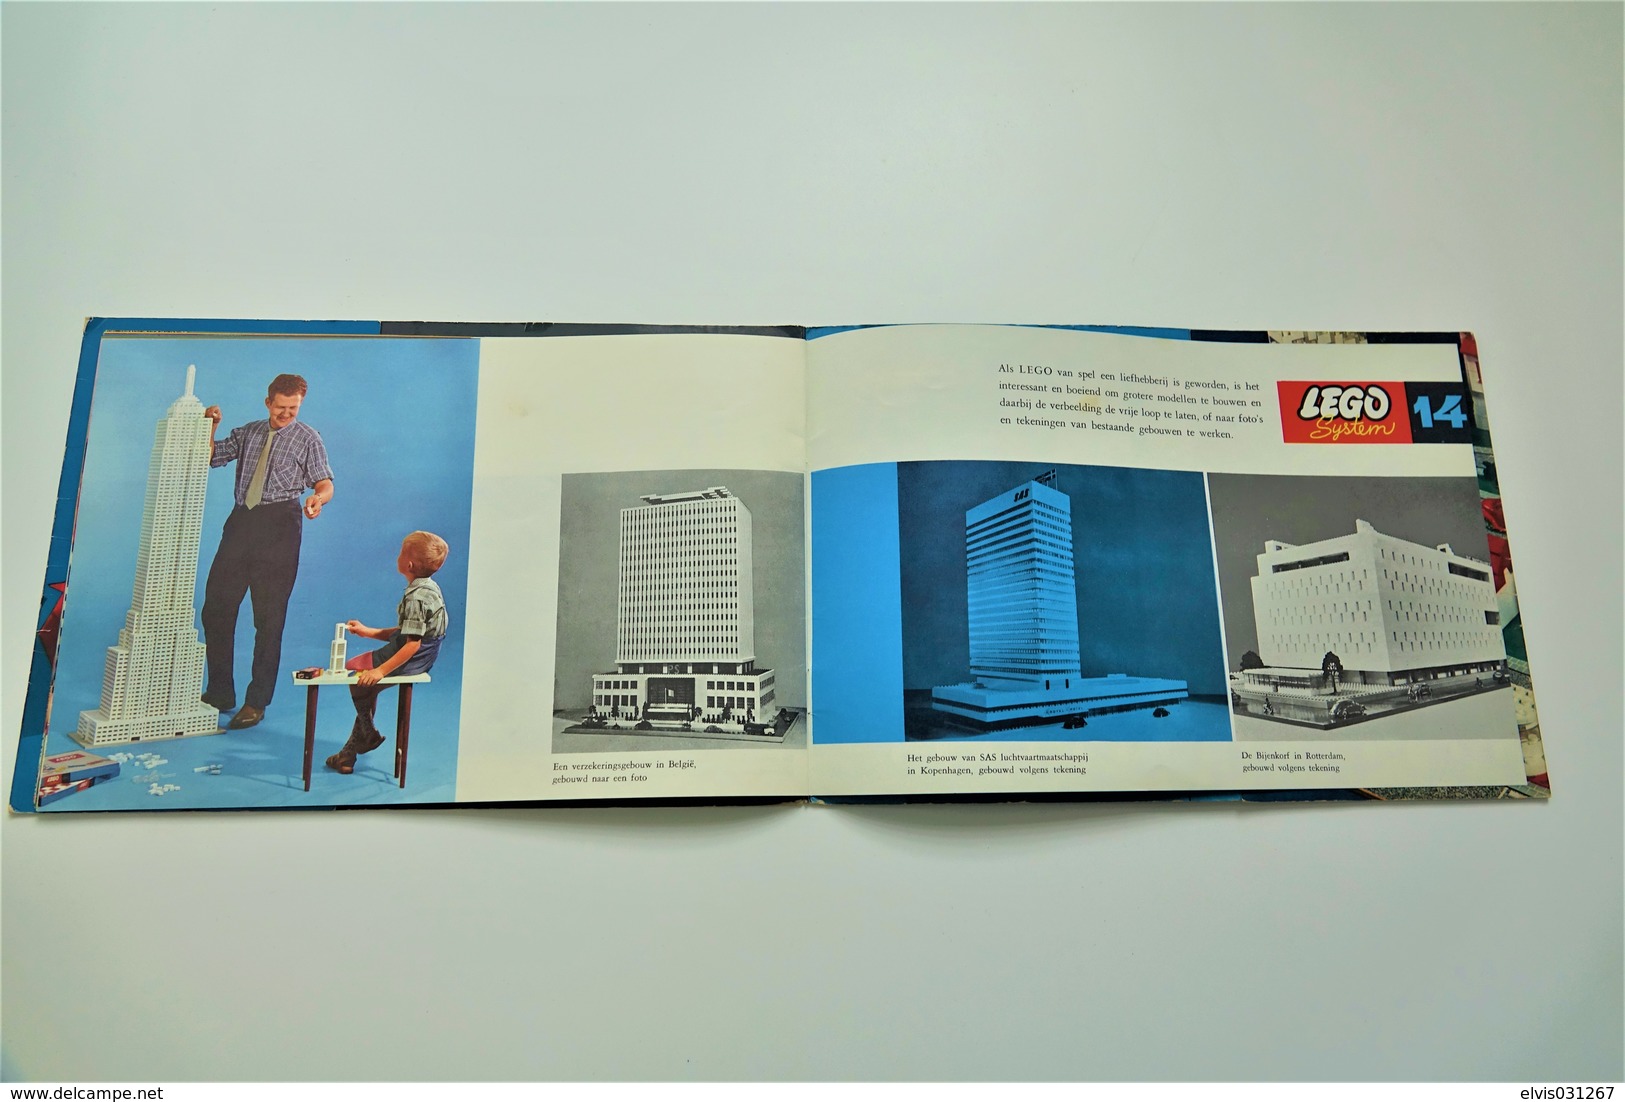 LEGO - IDEEËNBOEK - RaRe - collectors Item - Original Lego system 1960's - vintage